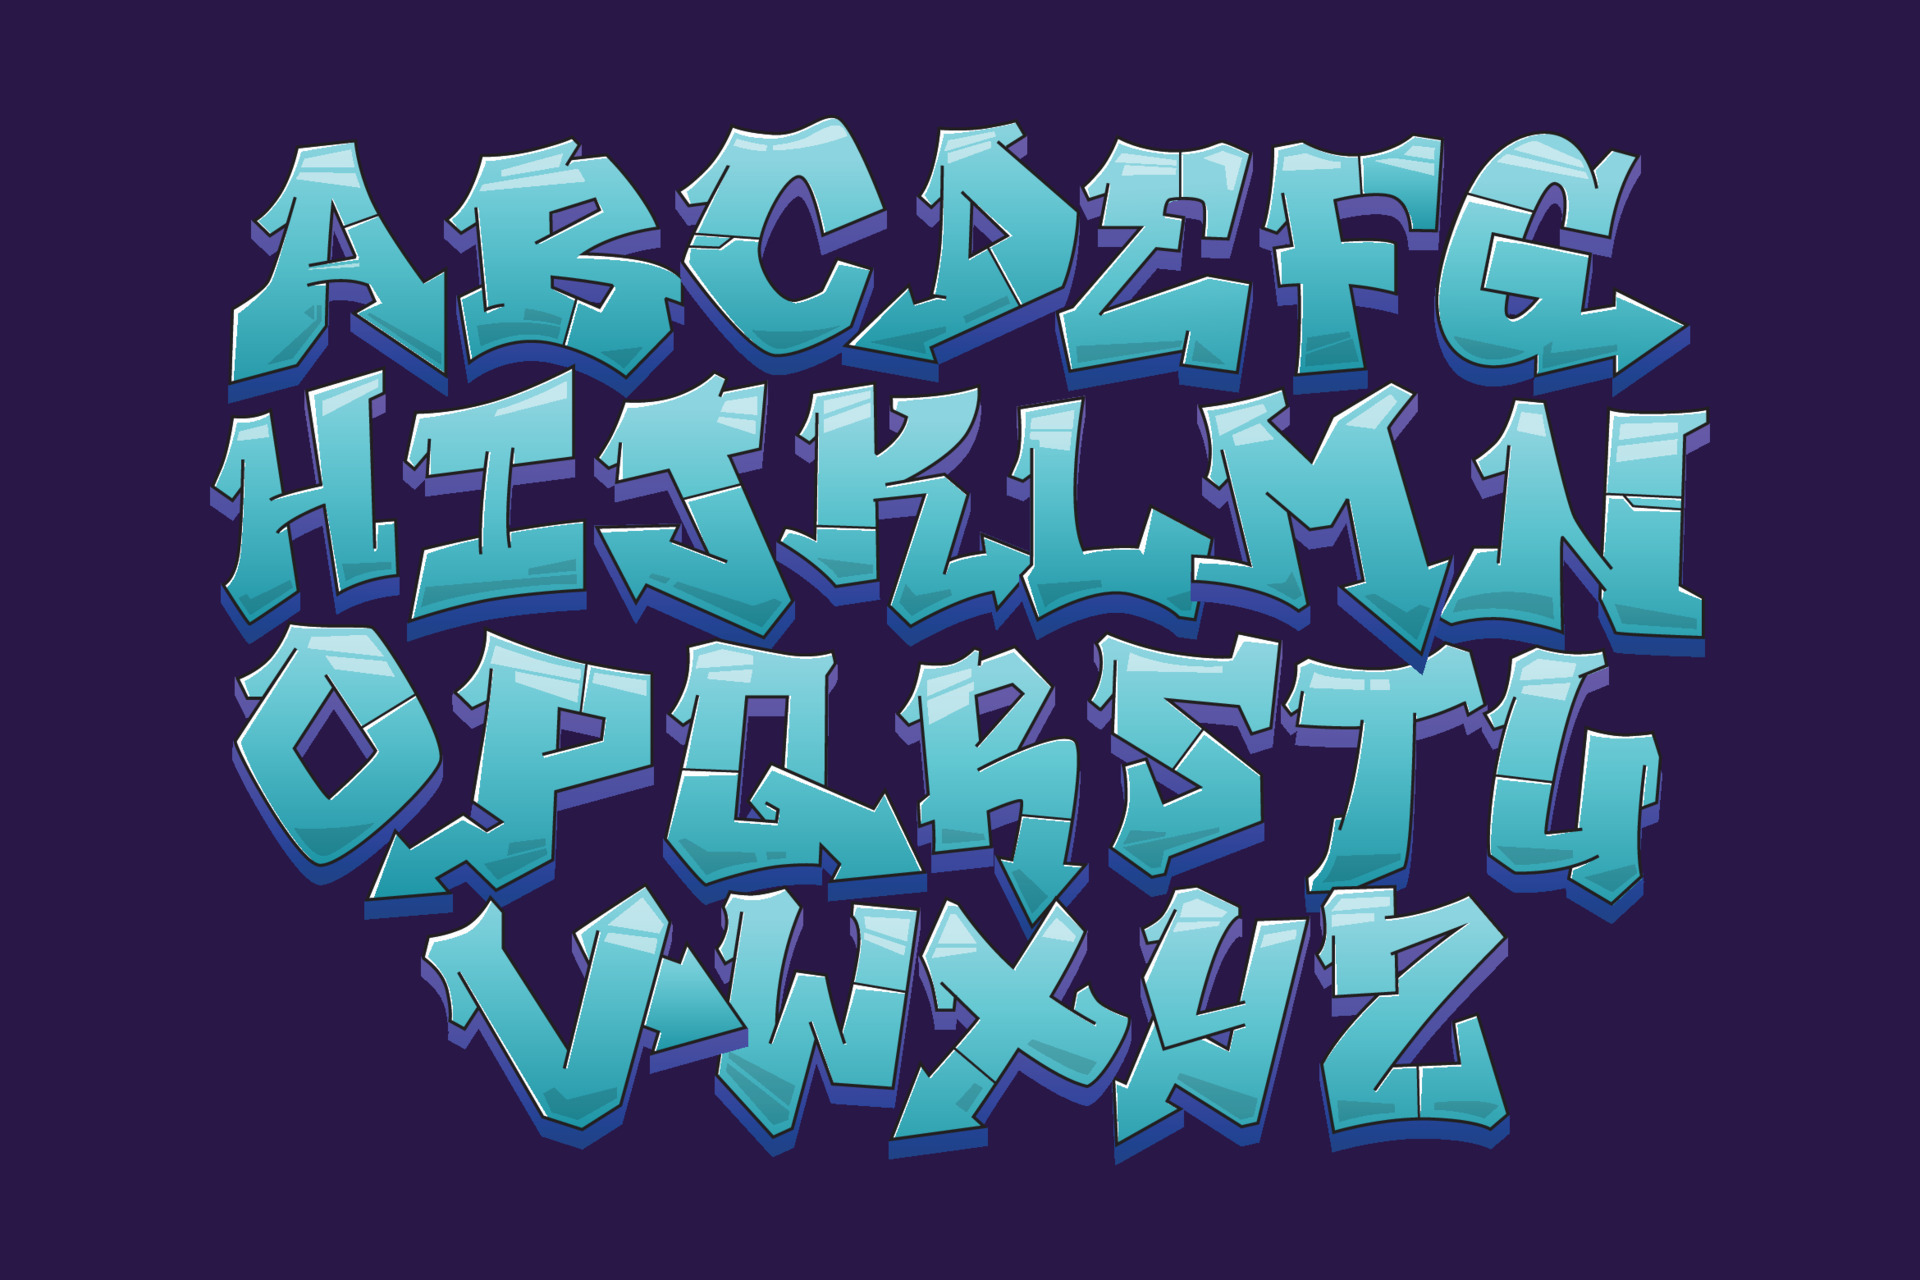 DIGITAL Graffiti Tag Alphabet SVG Lettering Graphic Vector Hand